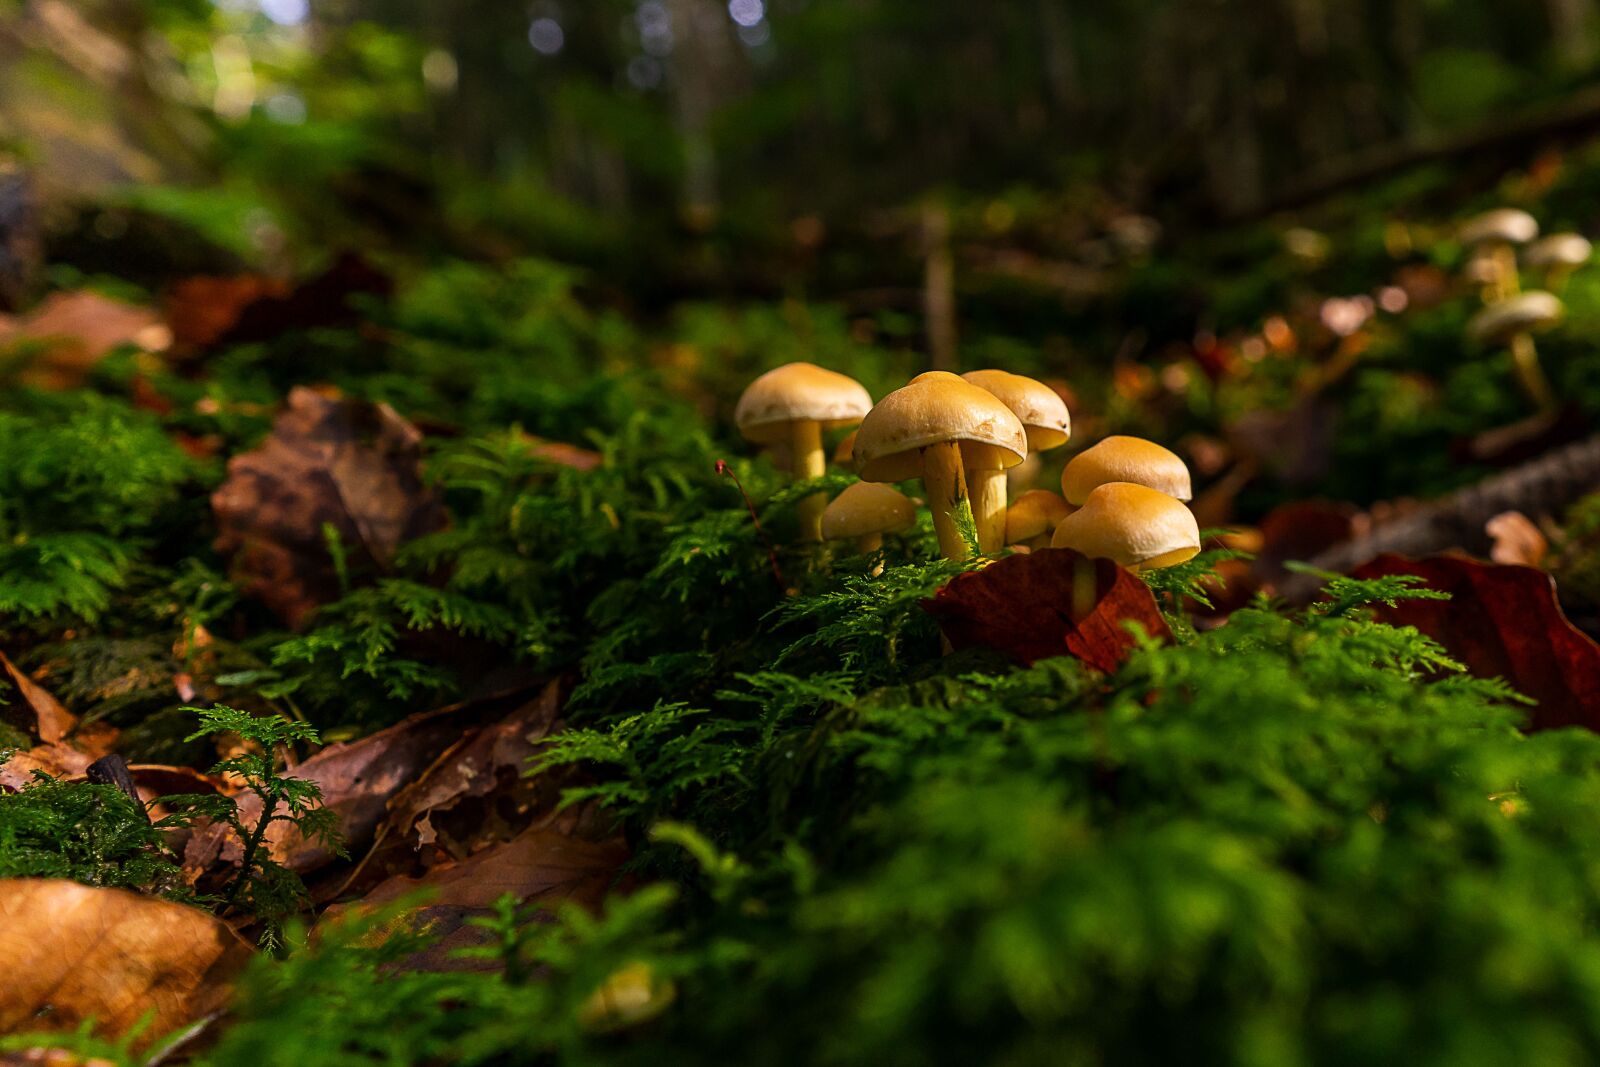 ZEISS Batis 18mm F2.8 sample photo. Nature, mushrooms, autumn photography